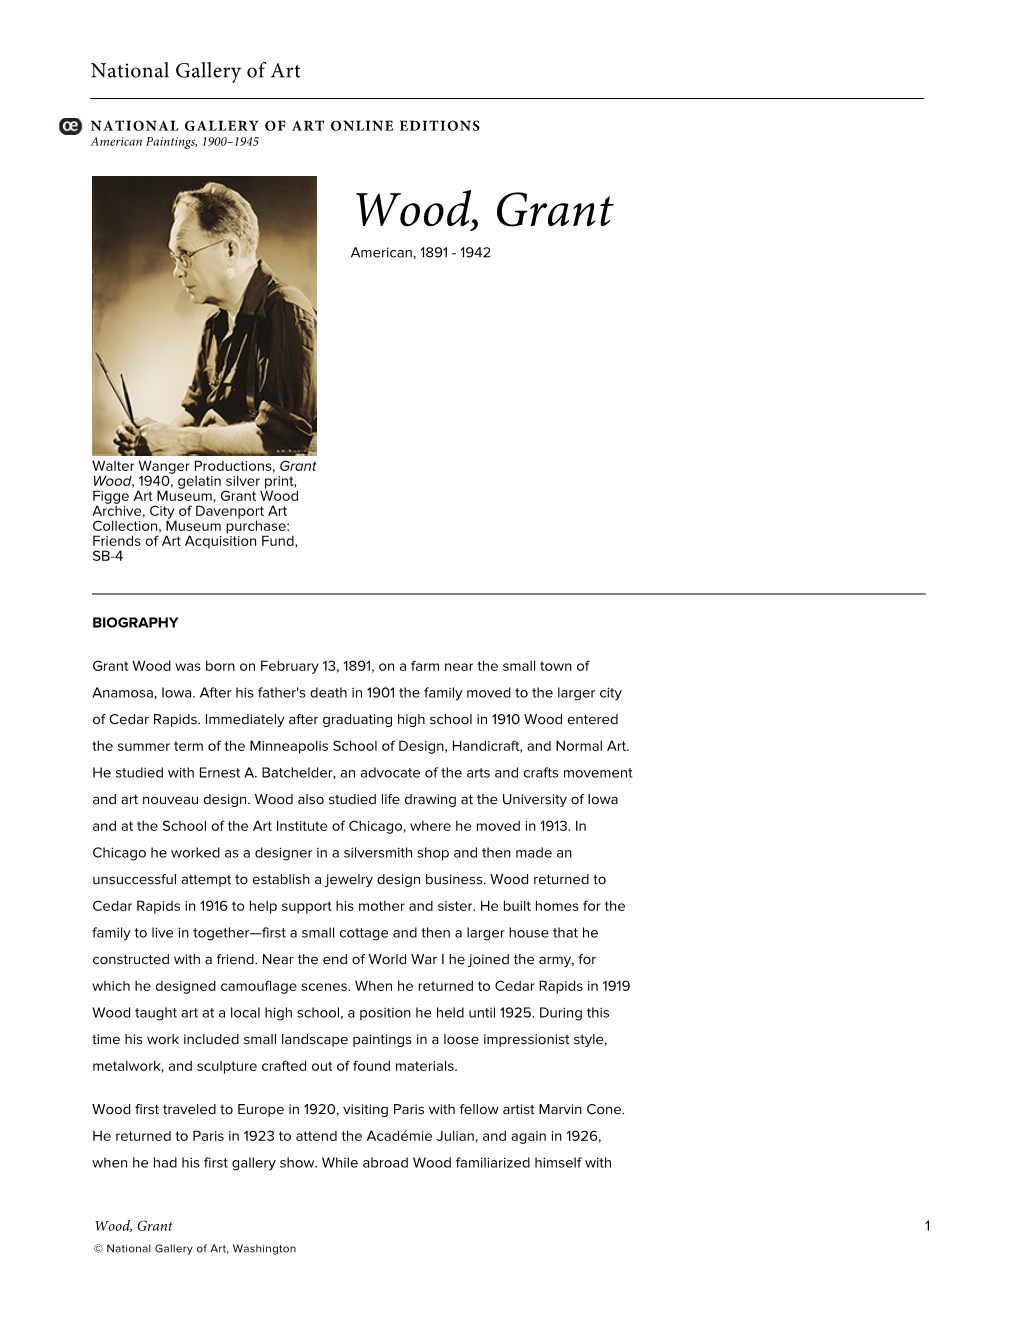 Wood, Grant American, 1891 - 1942